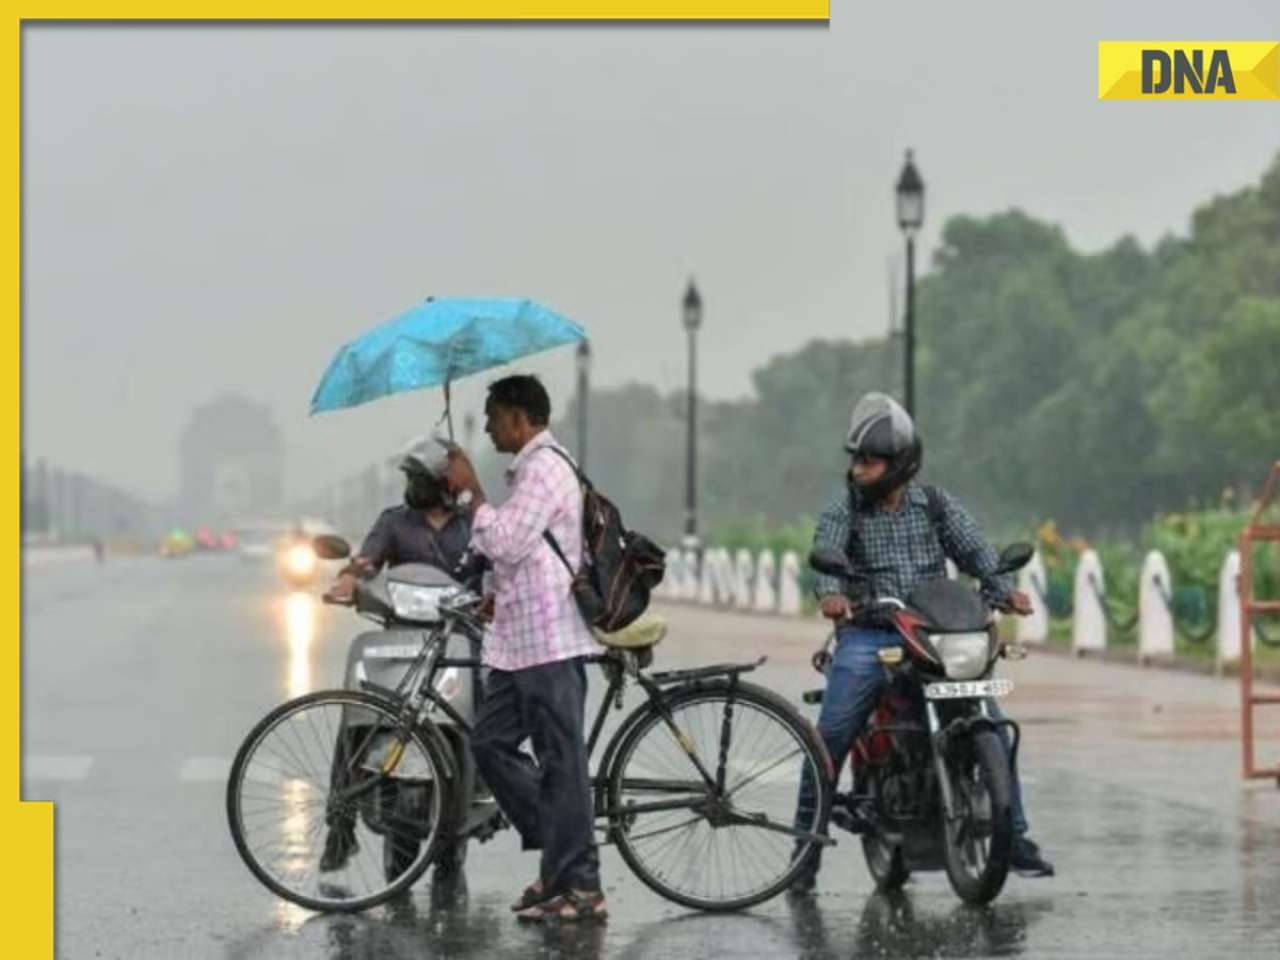 Delhi NCR weather update: Light rainfall in Noida, Gurugram, Ghaziabad; check latest forecast here